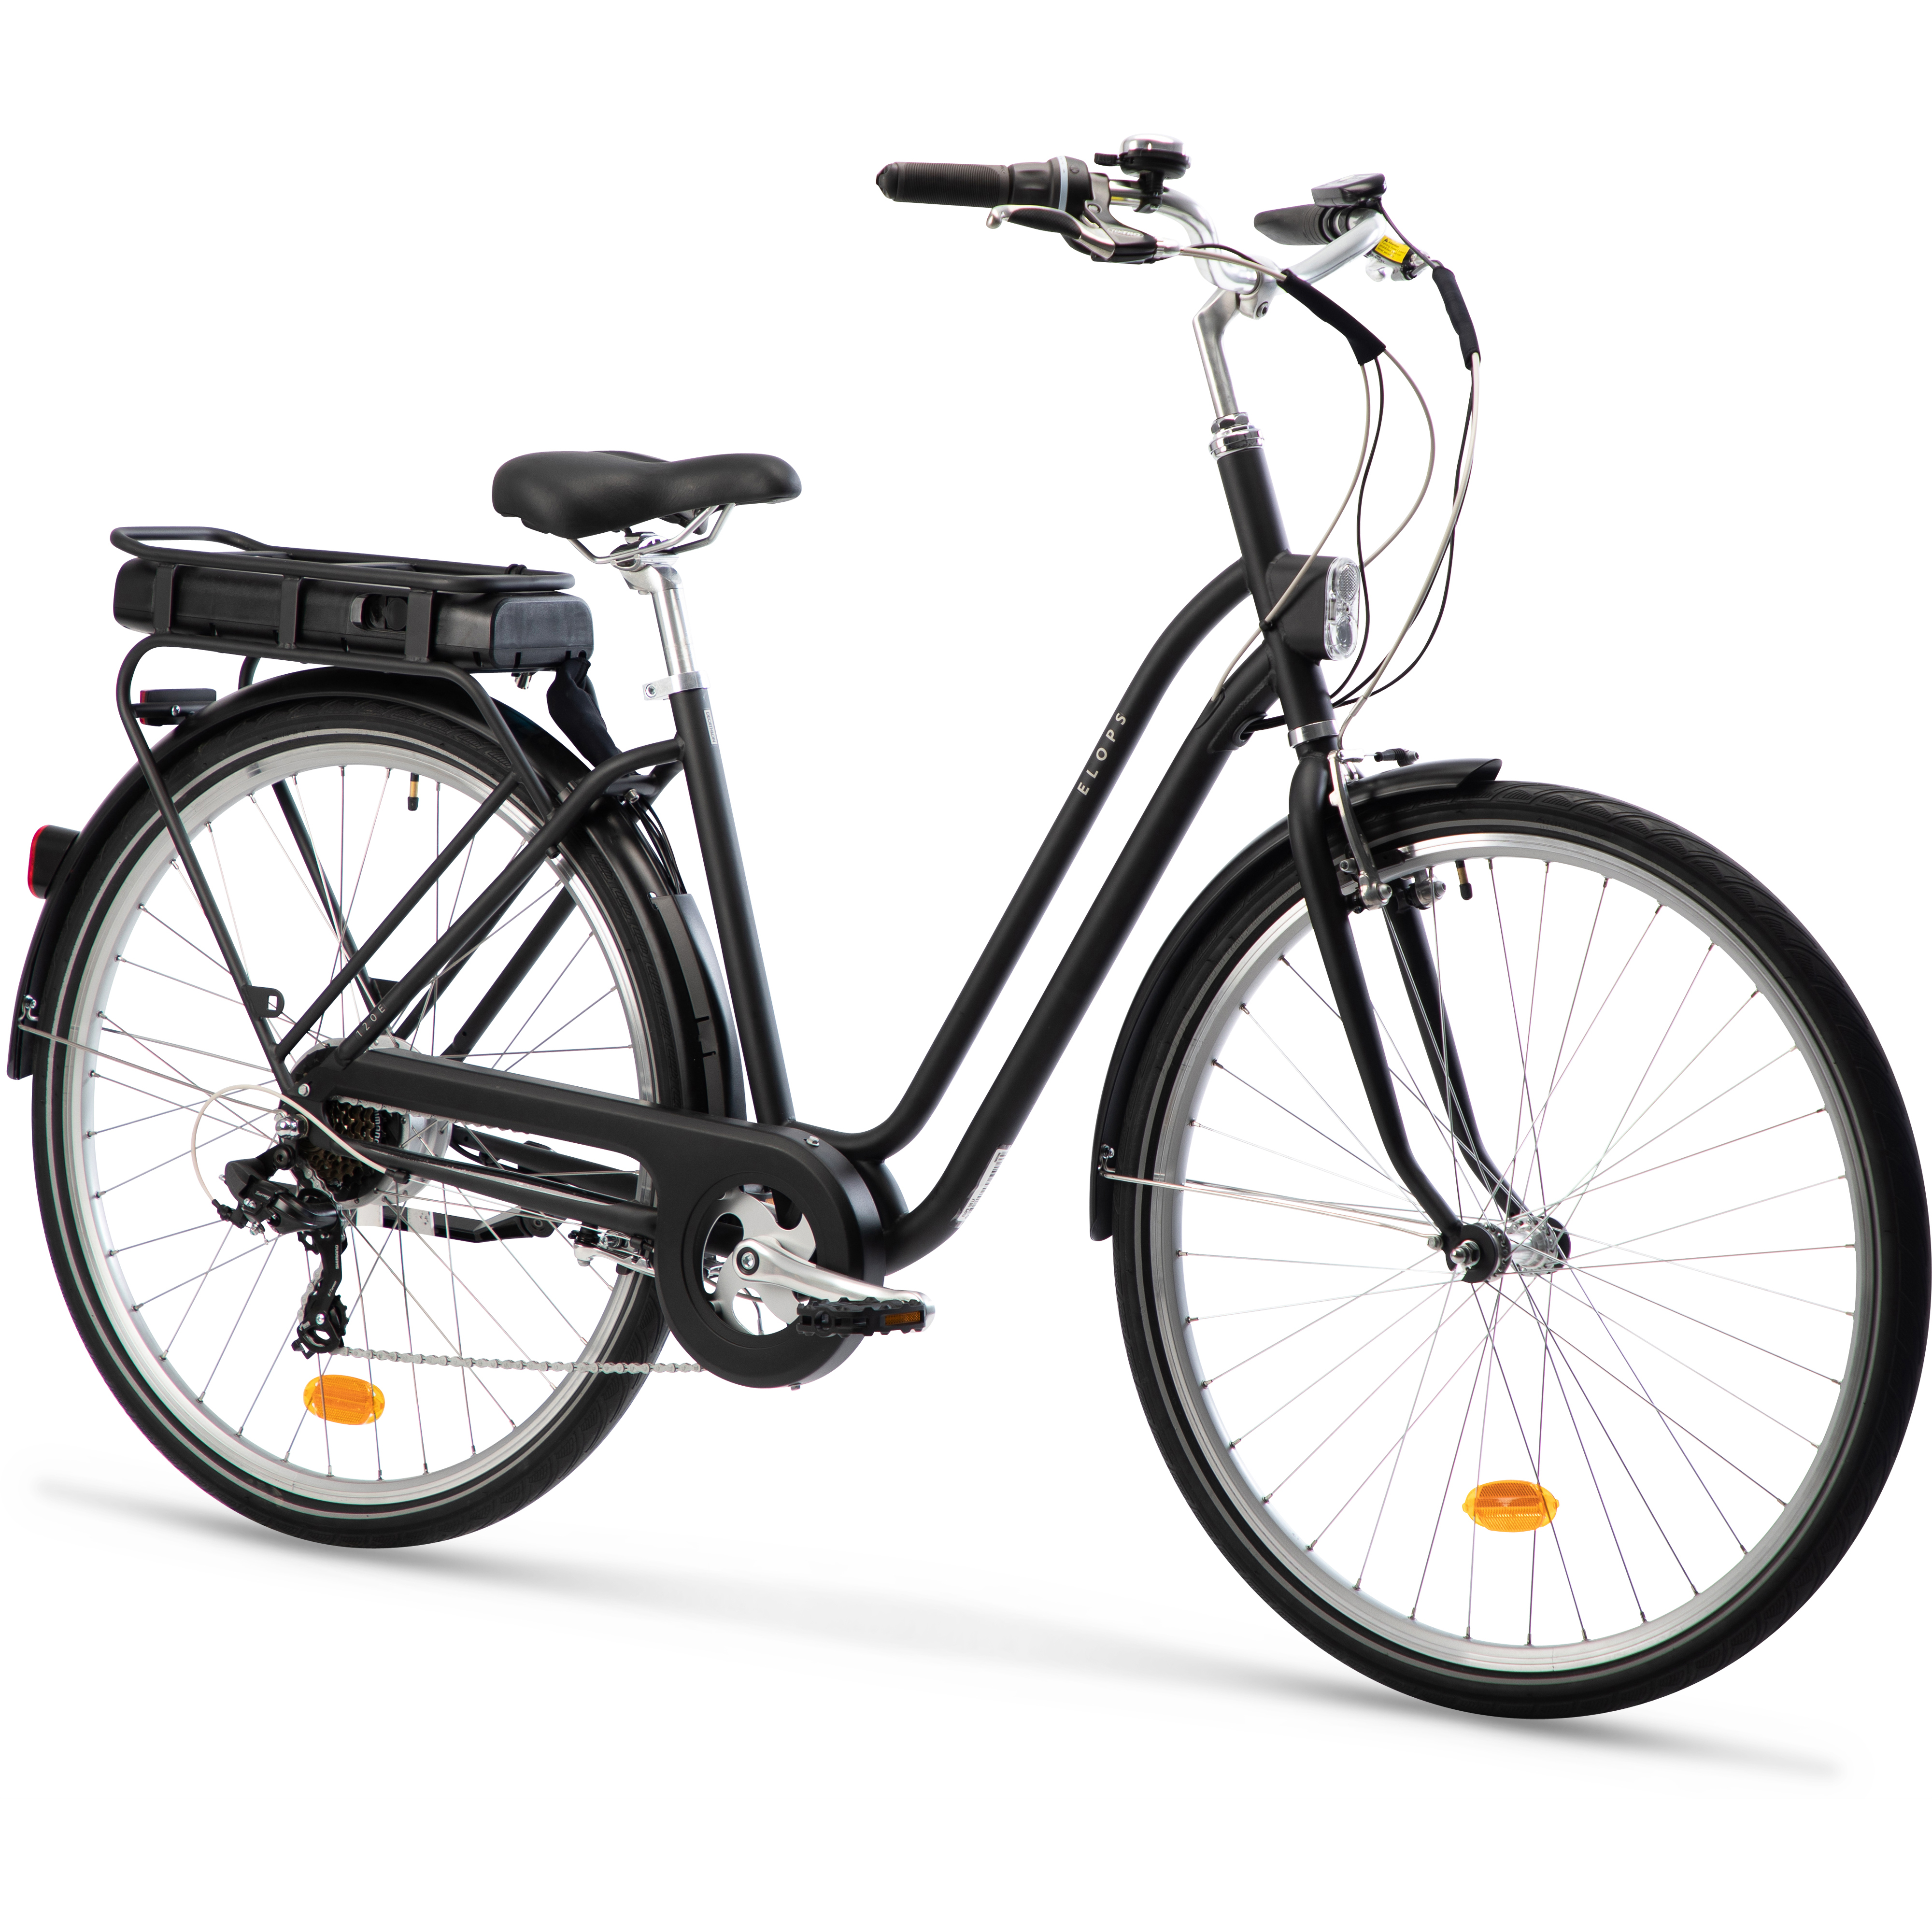 Bicicleta electrica mujer I Electrikfatbike